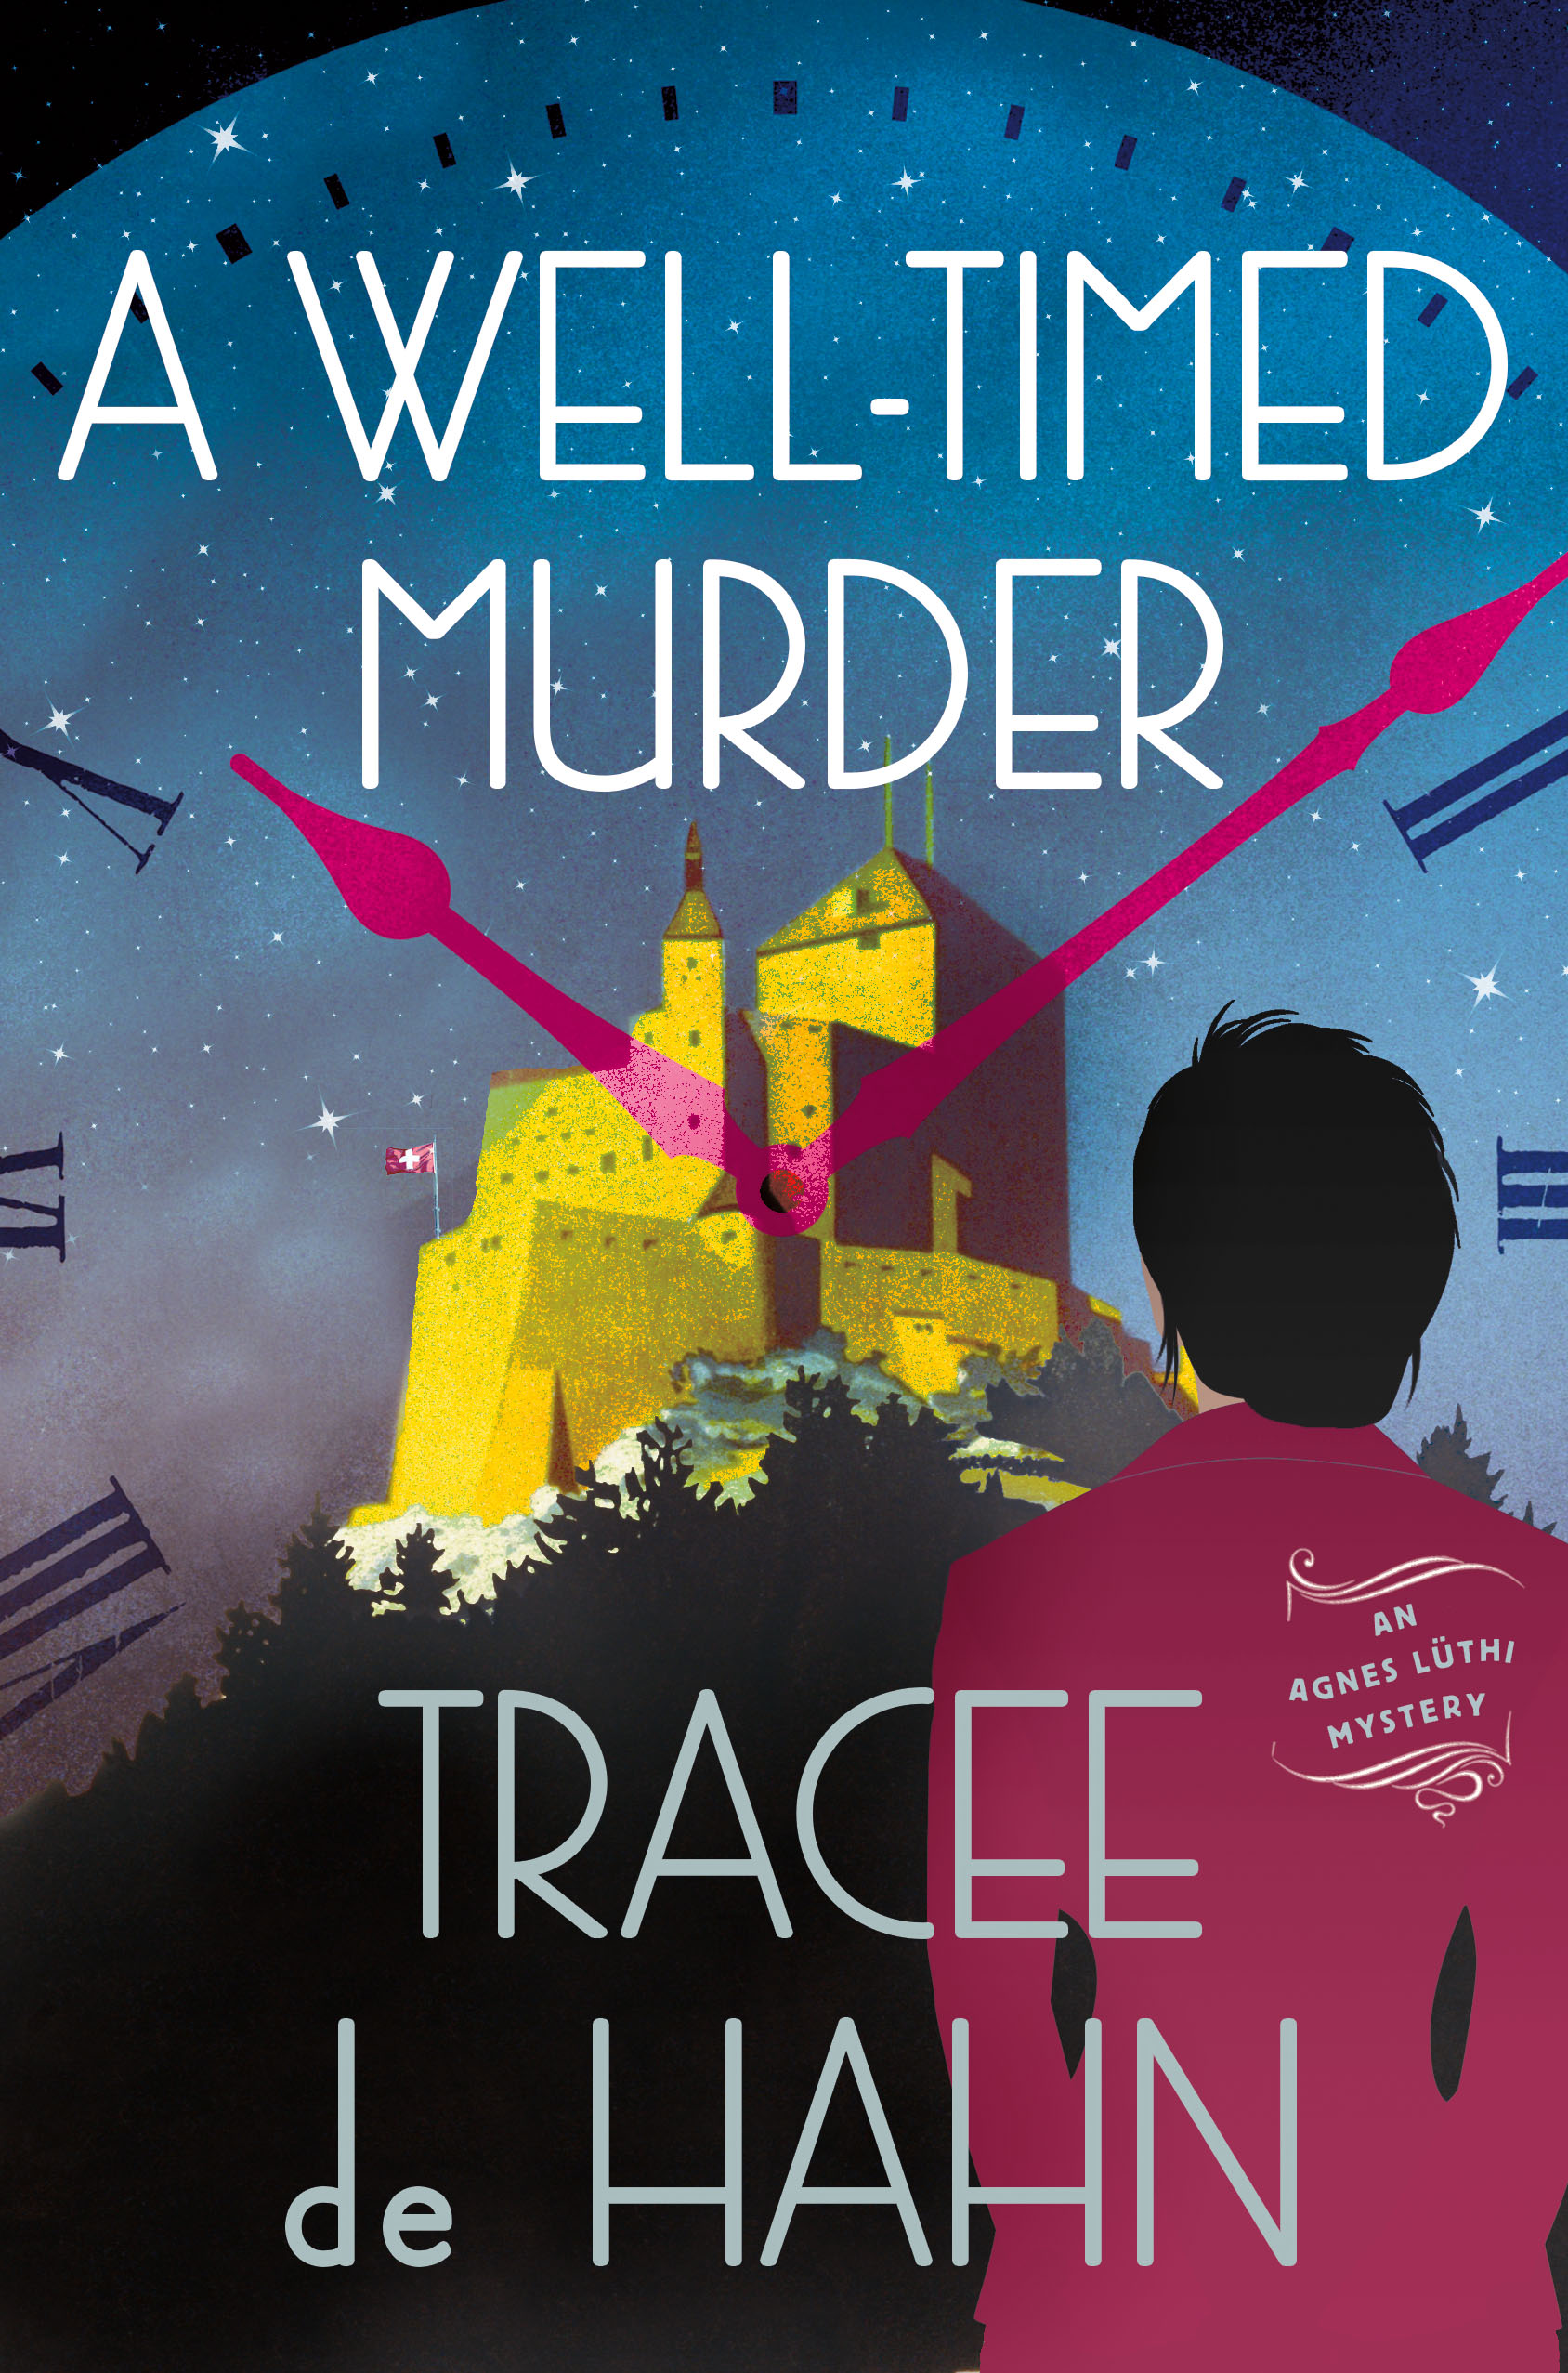 A Well-Timed Murder by Tracee de Hahn